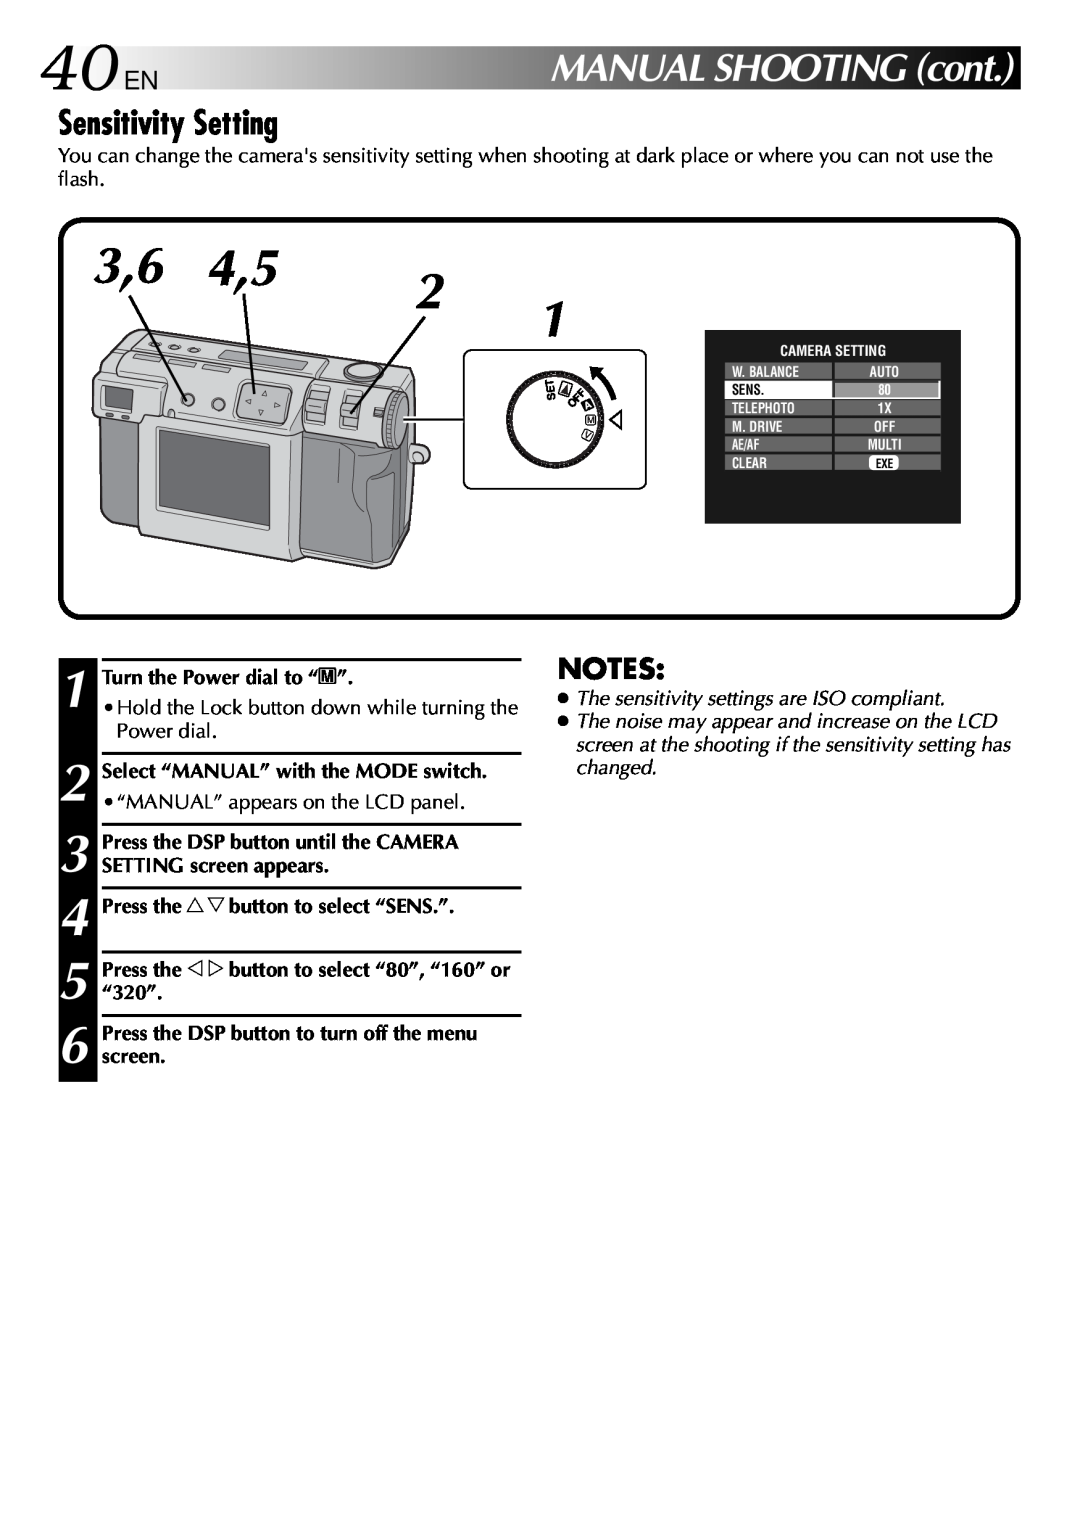 JVC GC-QX3 manual 40EN, Sensitivity Setting, MANUALSHOOTINGcont, Press the r t button to select “SENS.”, Multi, Off M 